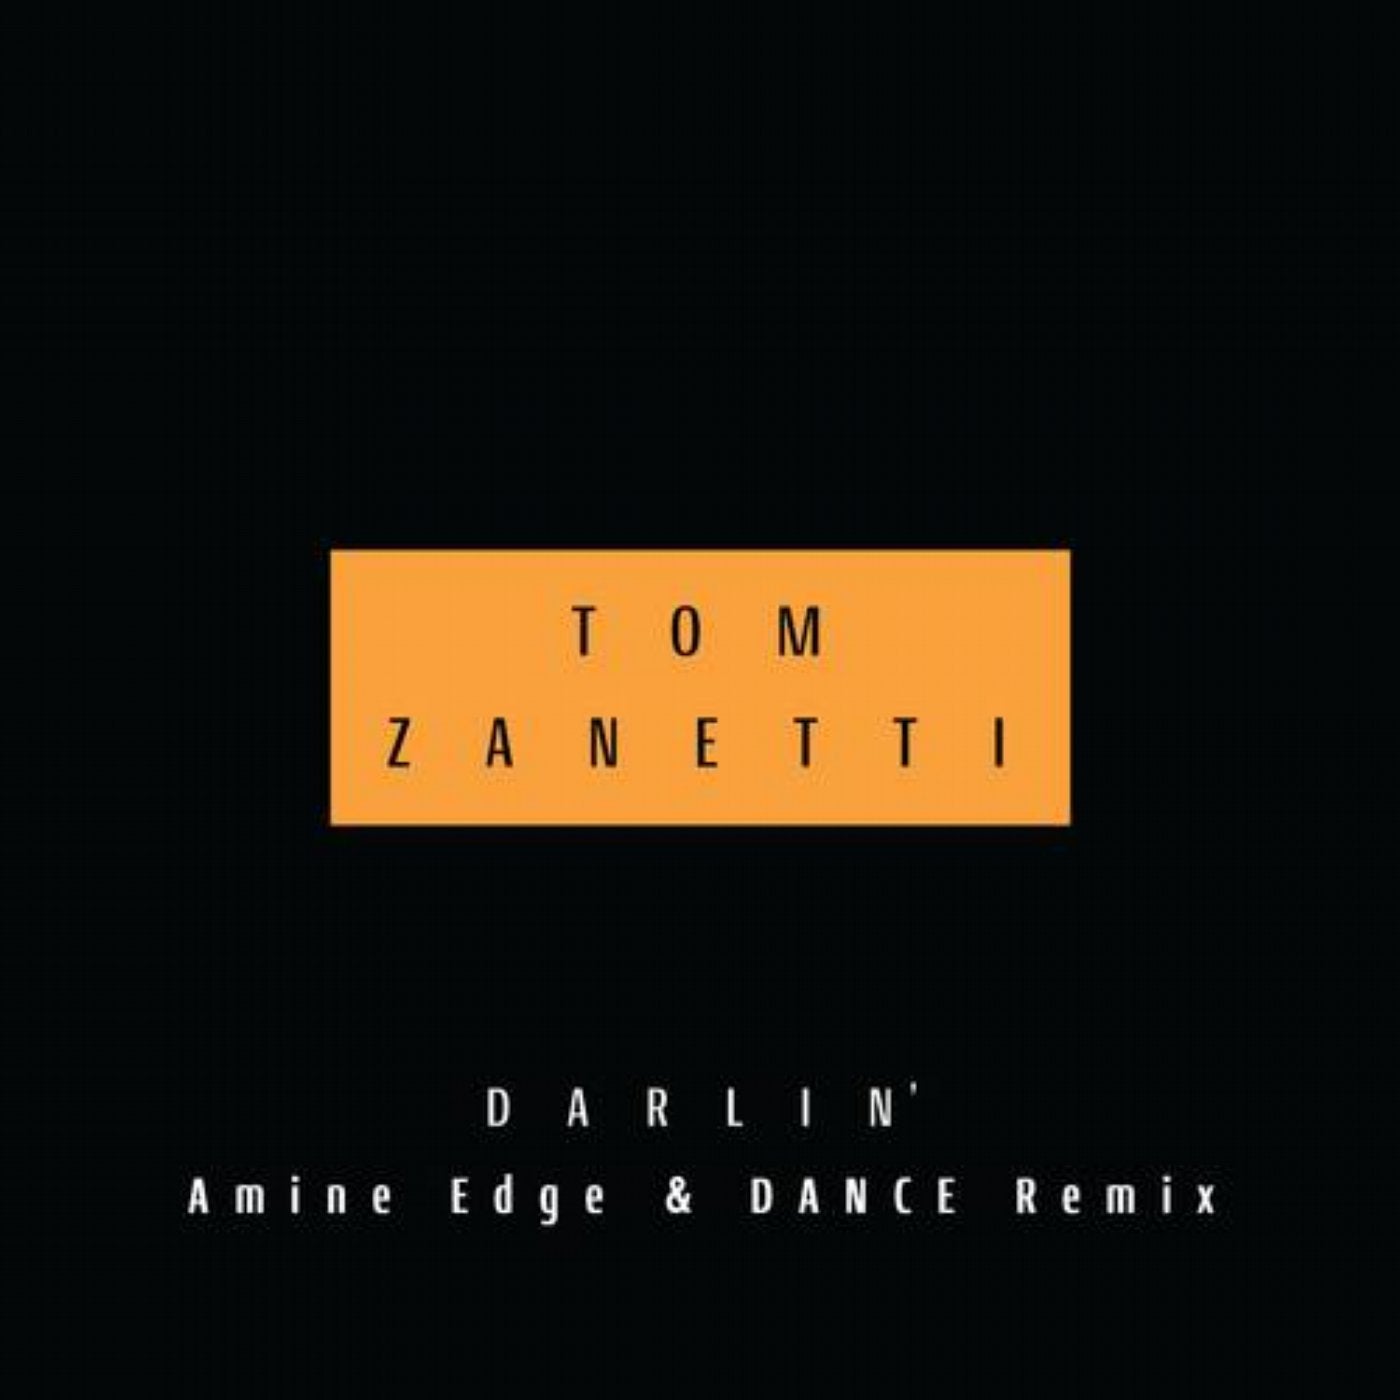 Darlin' (Amine Edge & DANCE Remix)